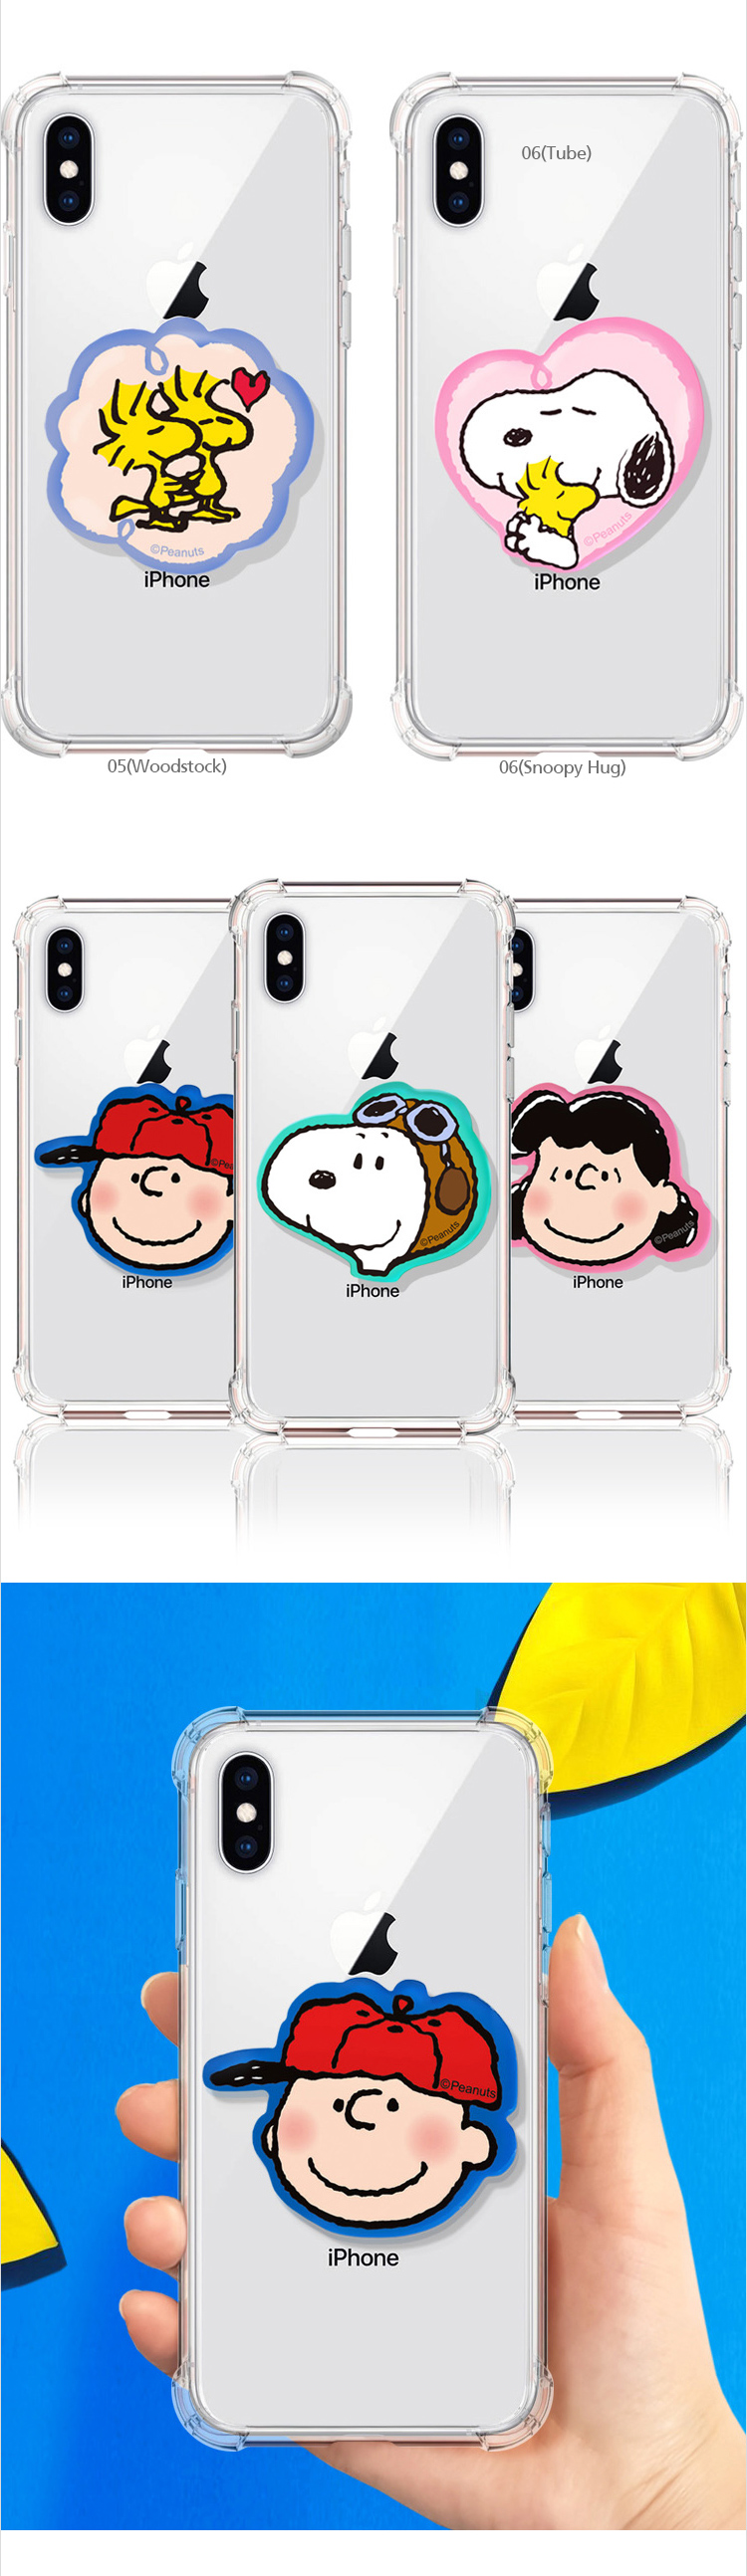 Genuine Snoopy Bullet Proof Case Iphone 6 6s Iphone 6 6s Plus Case Made In Korea Ebay